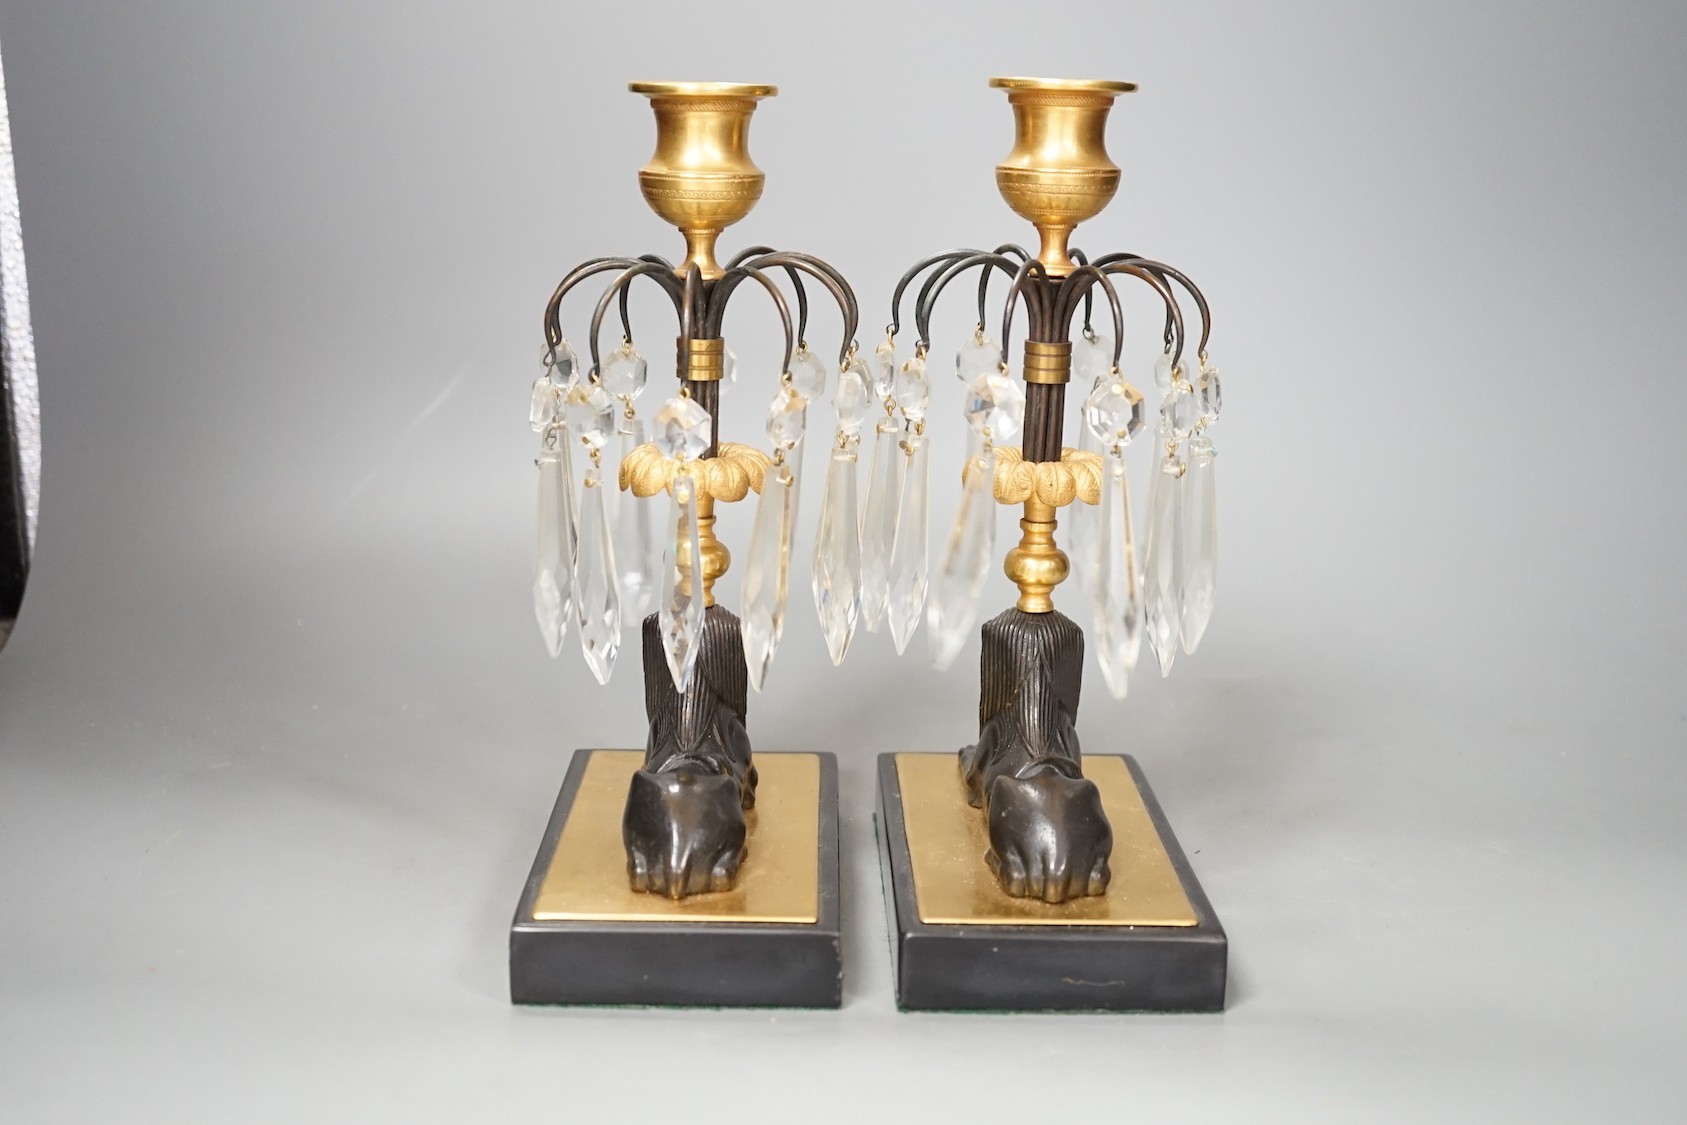 A pair of lustre drop 'sphinx' candlesticks - 23cm tall